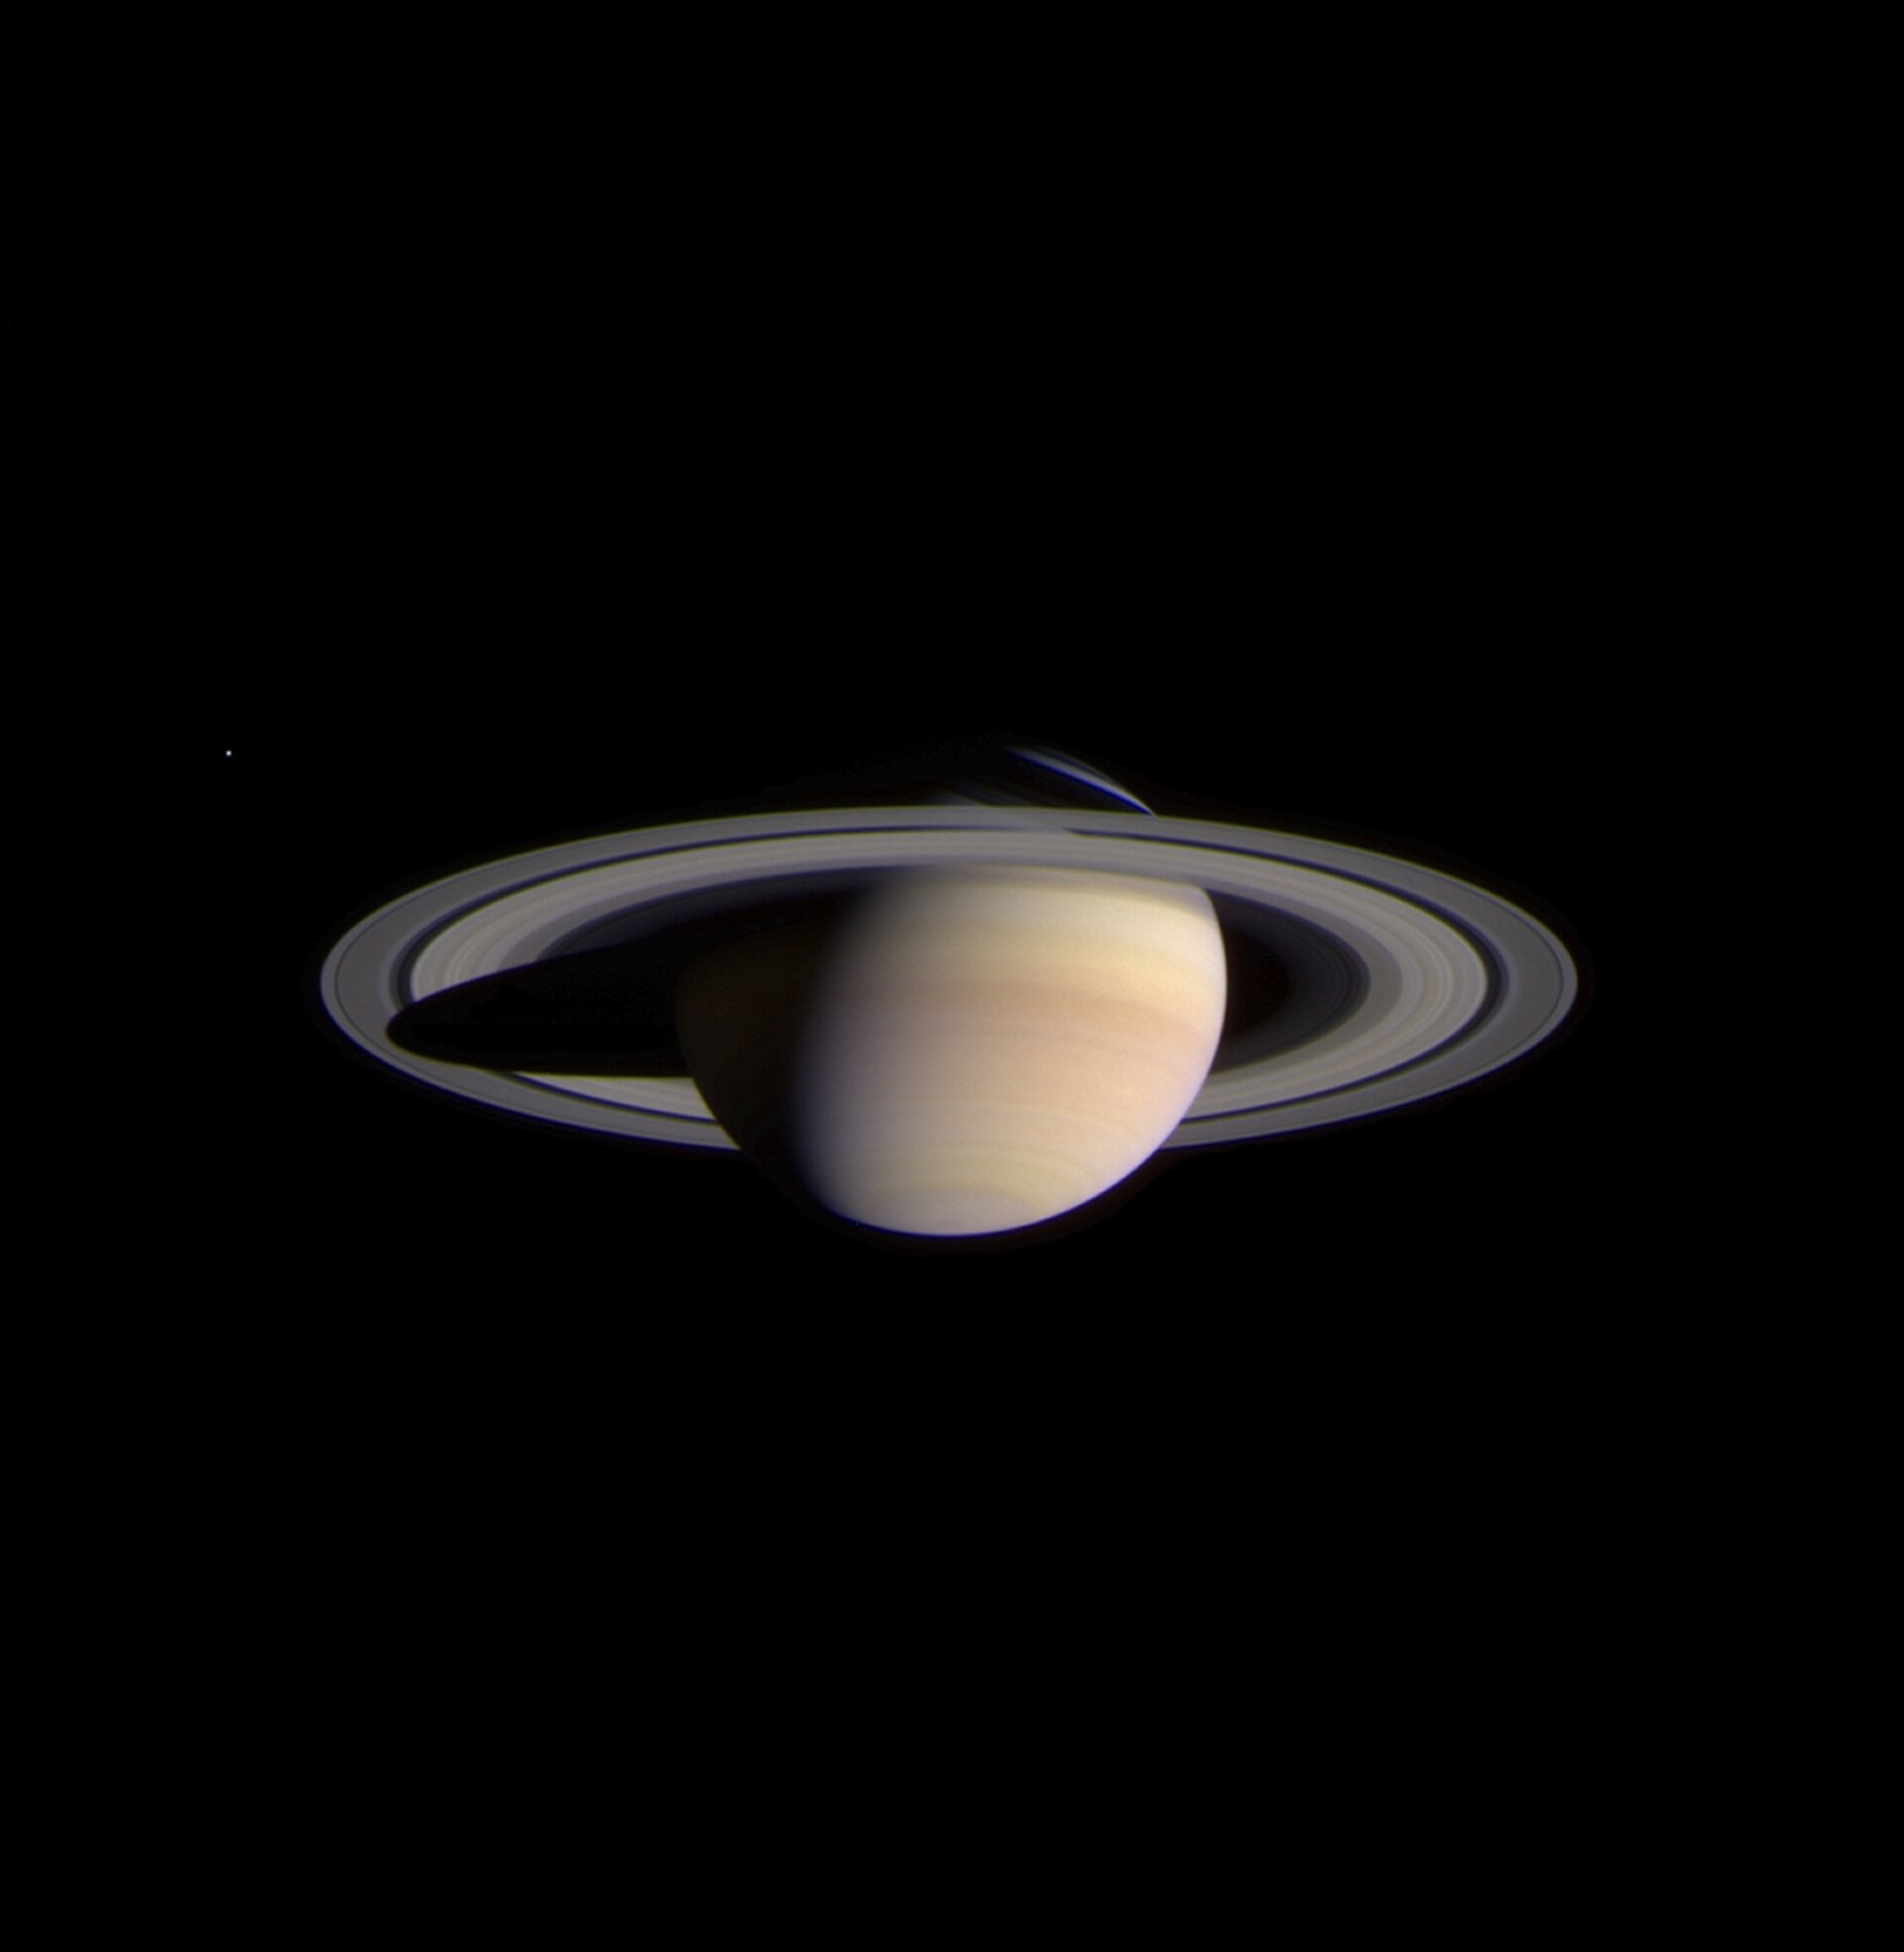 ESA - Approach to Saturn begins